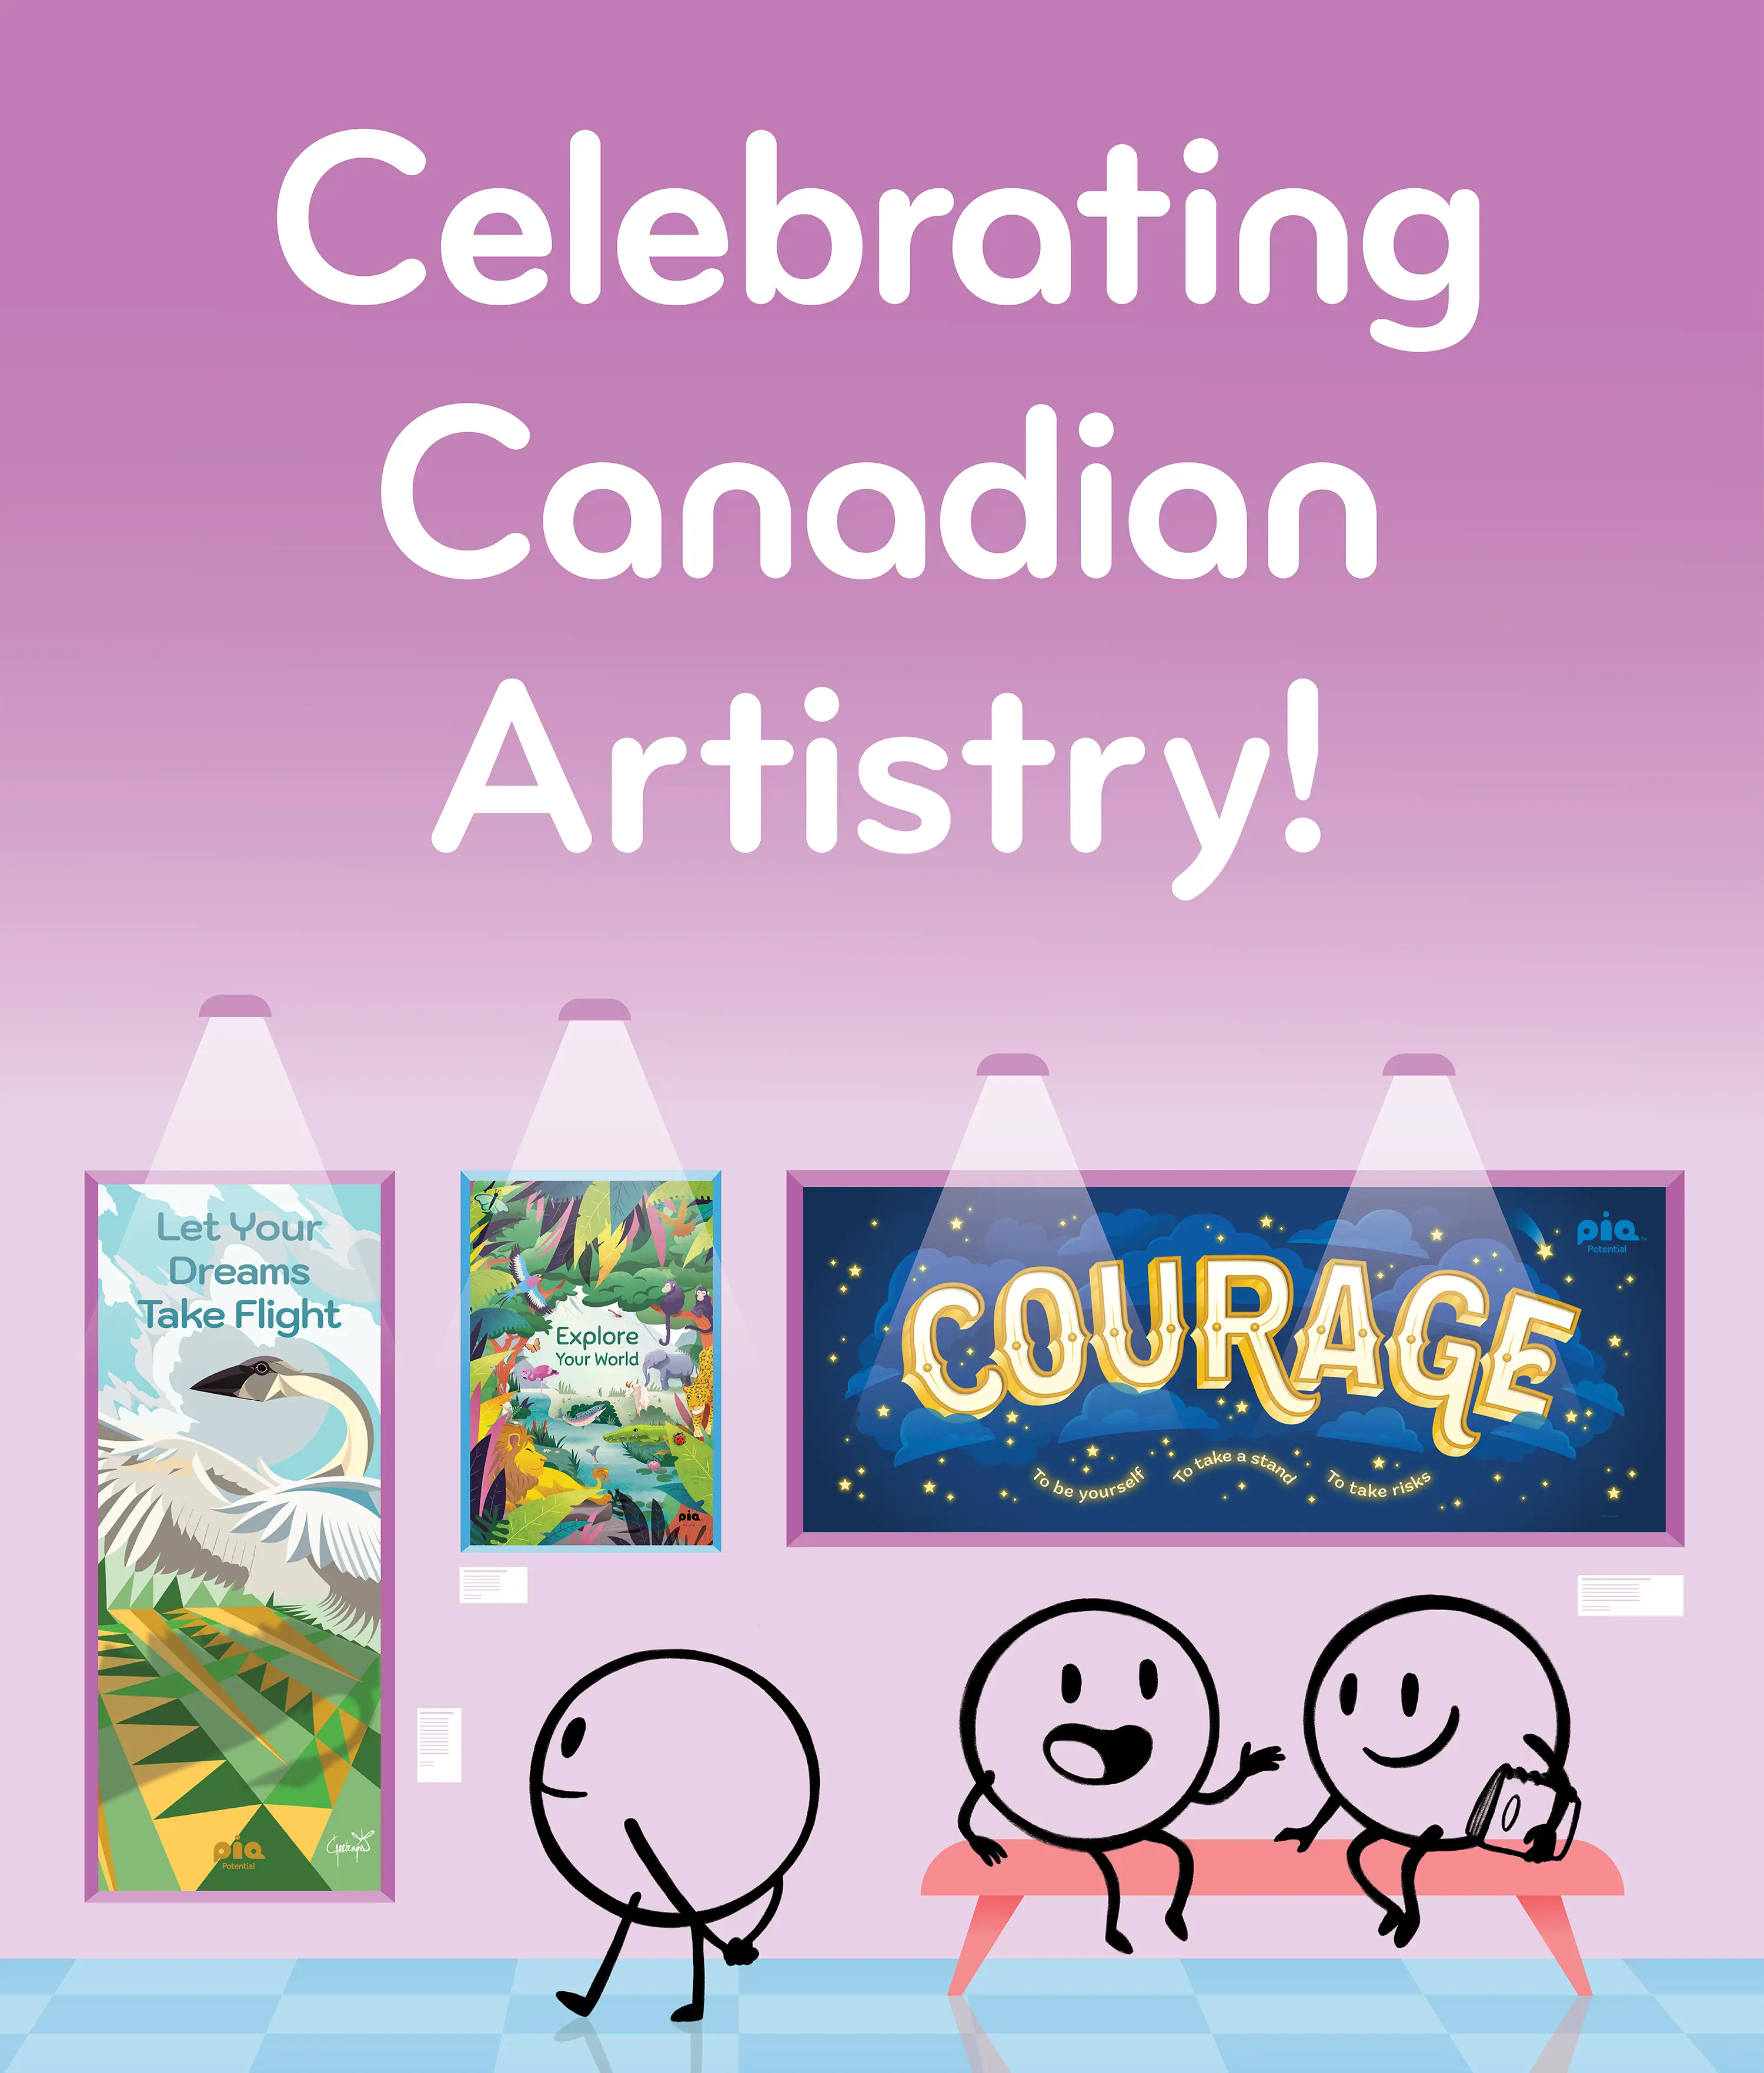 Celebrating Canadian Artistry!